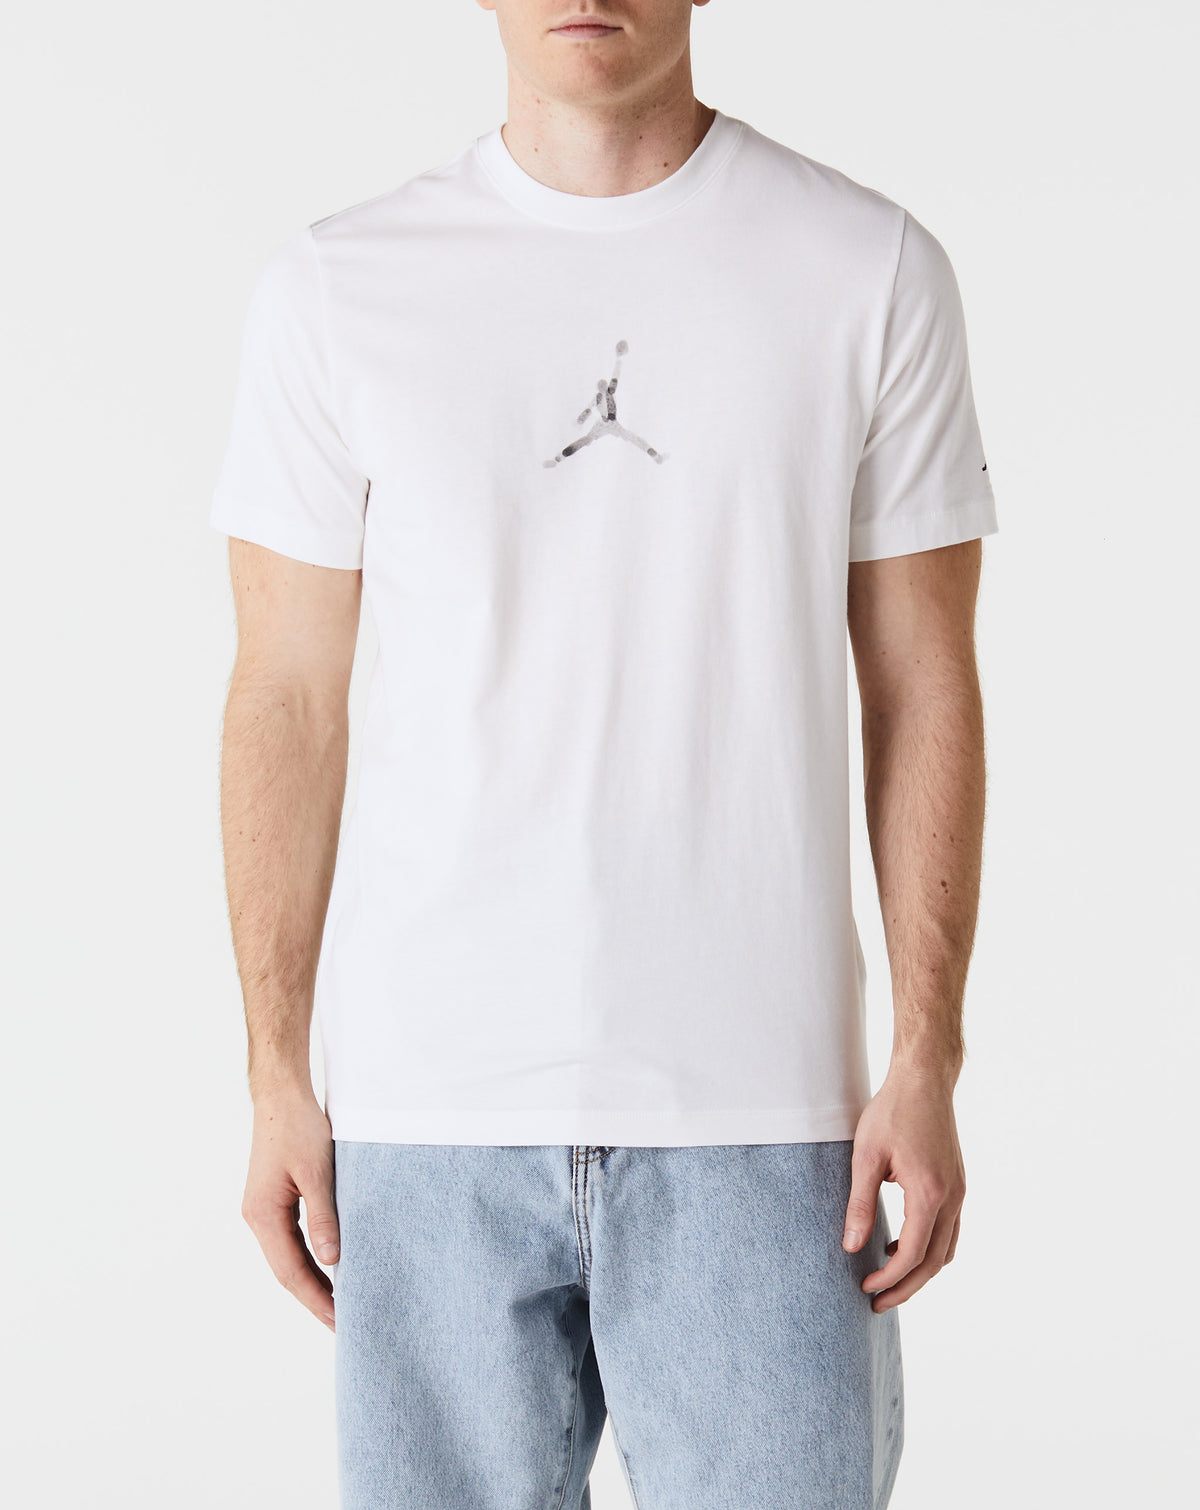 Air Jordan Jordan Brand T-Shirt - Rule of Next Apparel